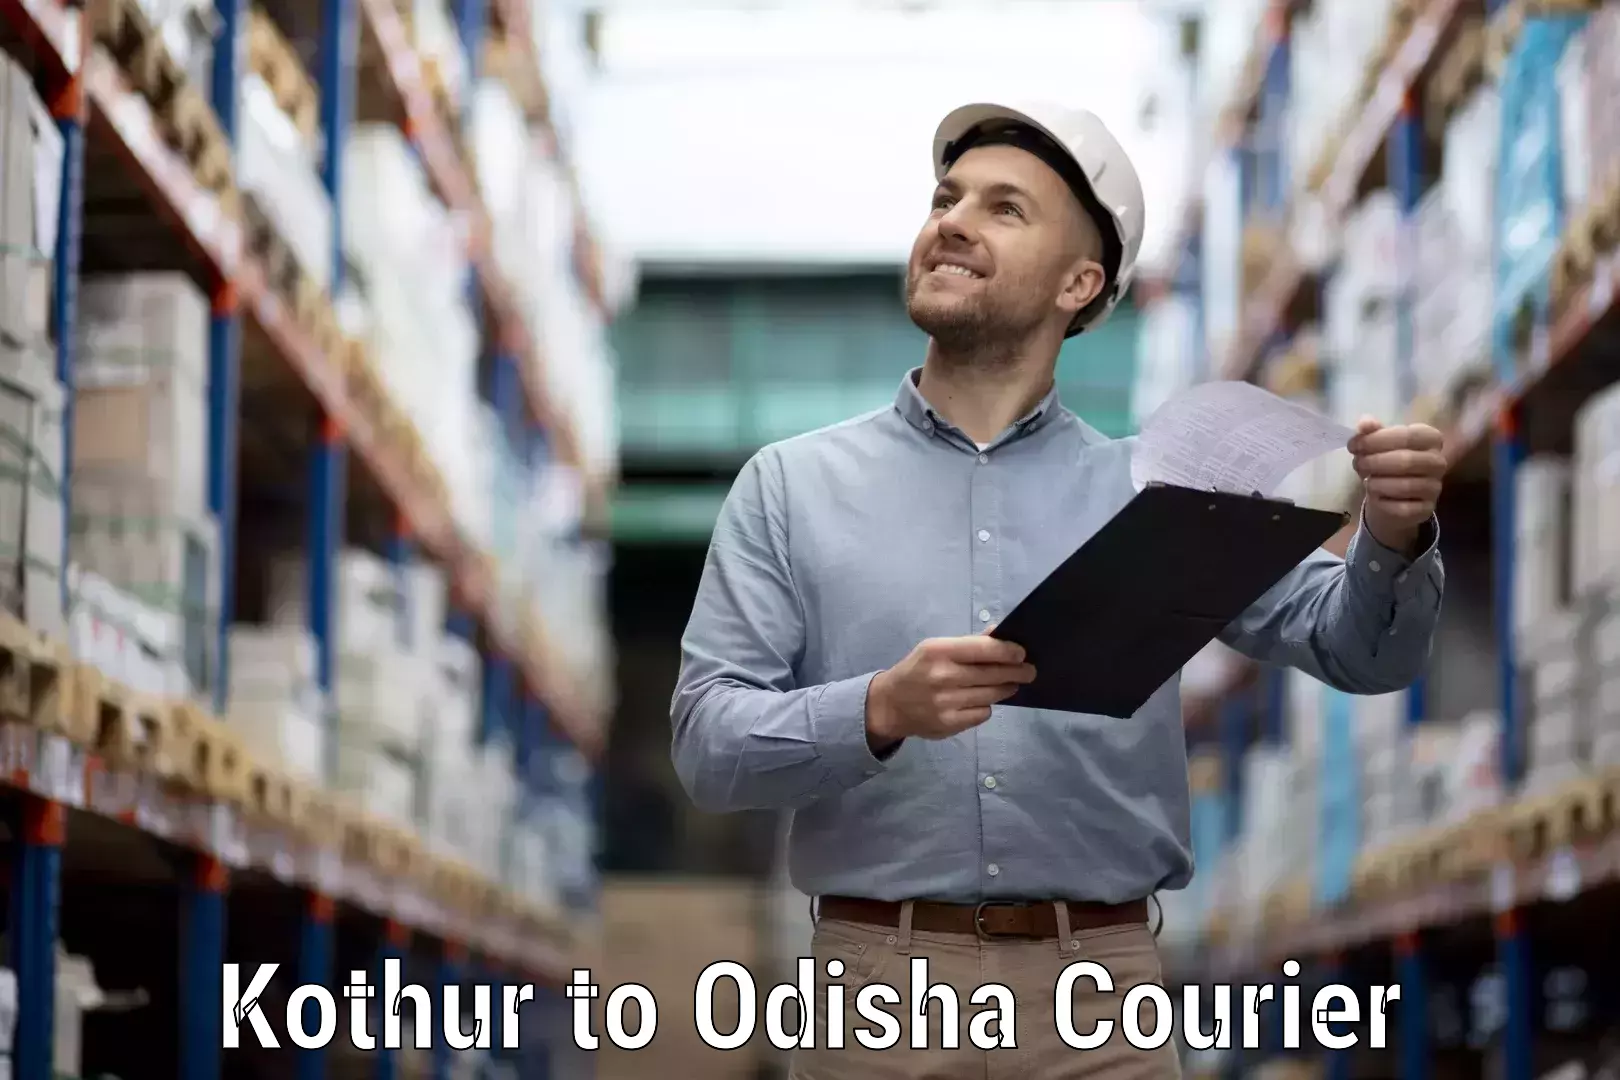 Global courier networks Kothur to Odisha